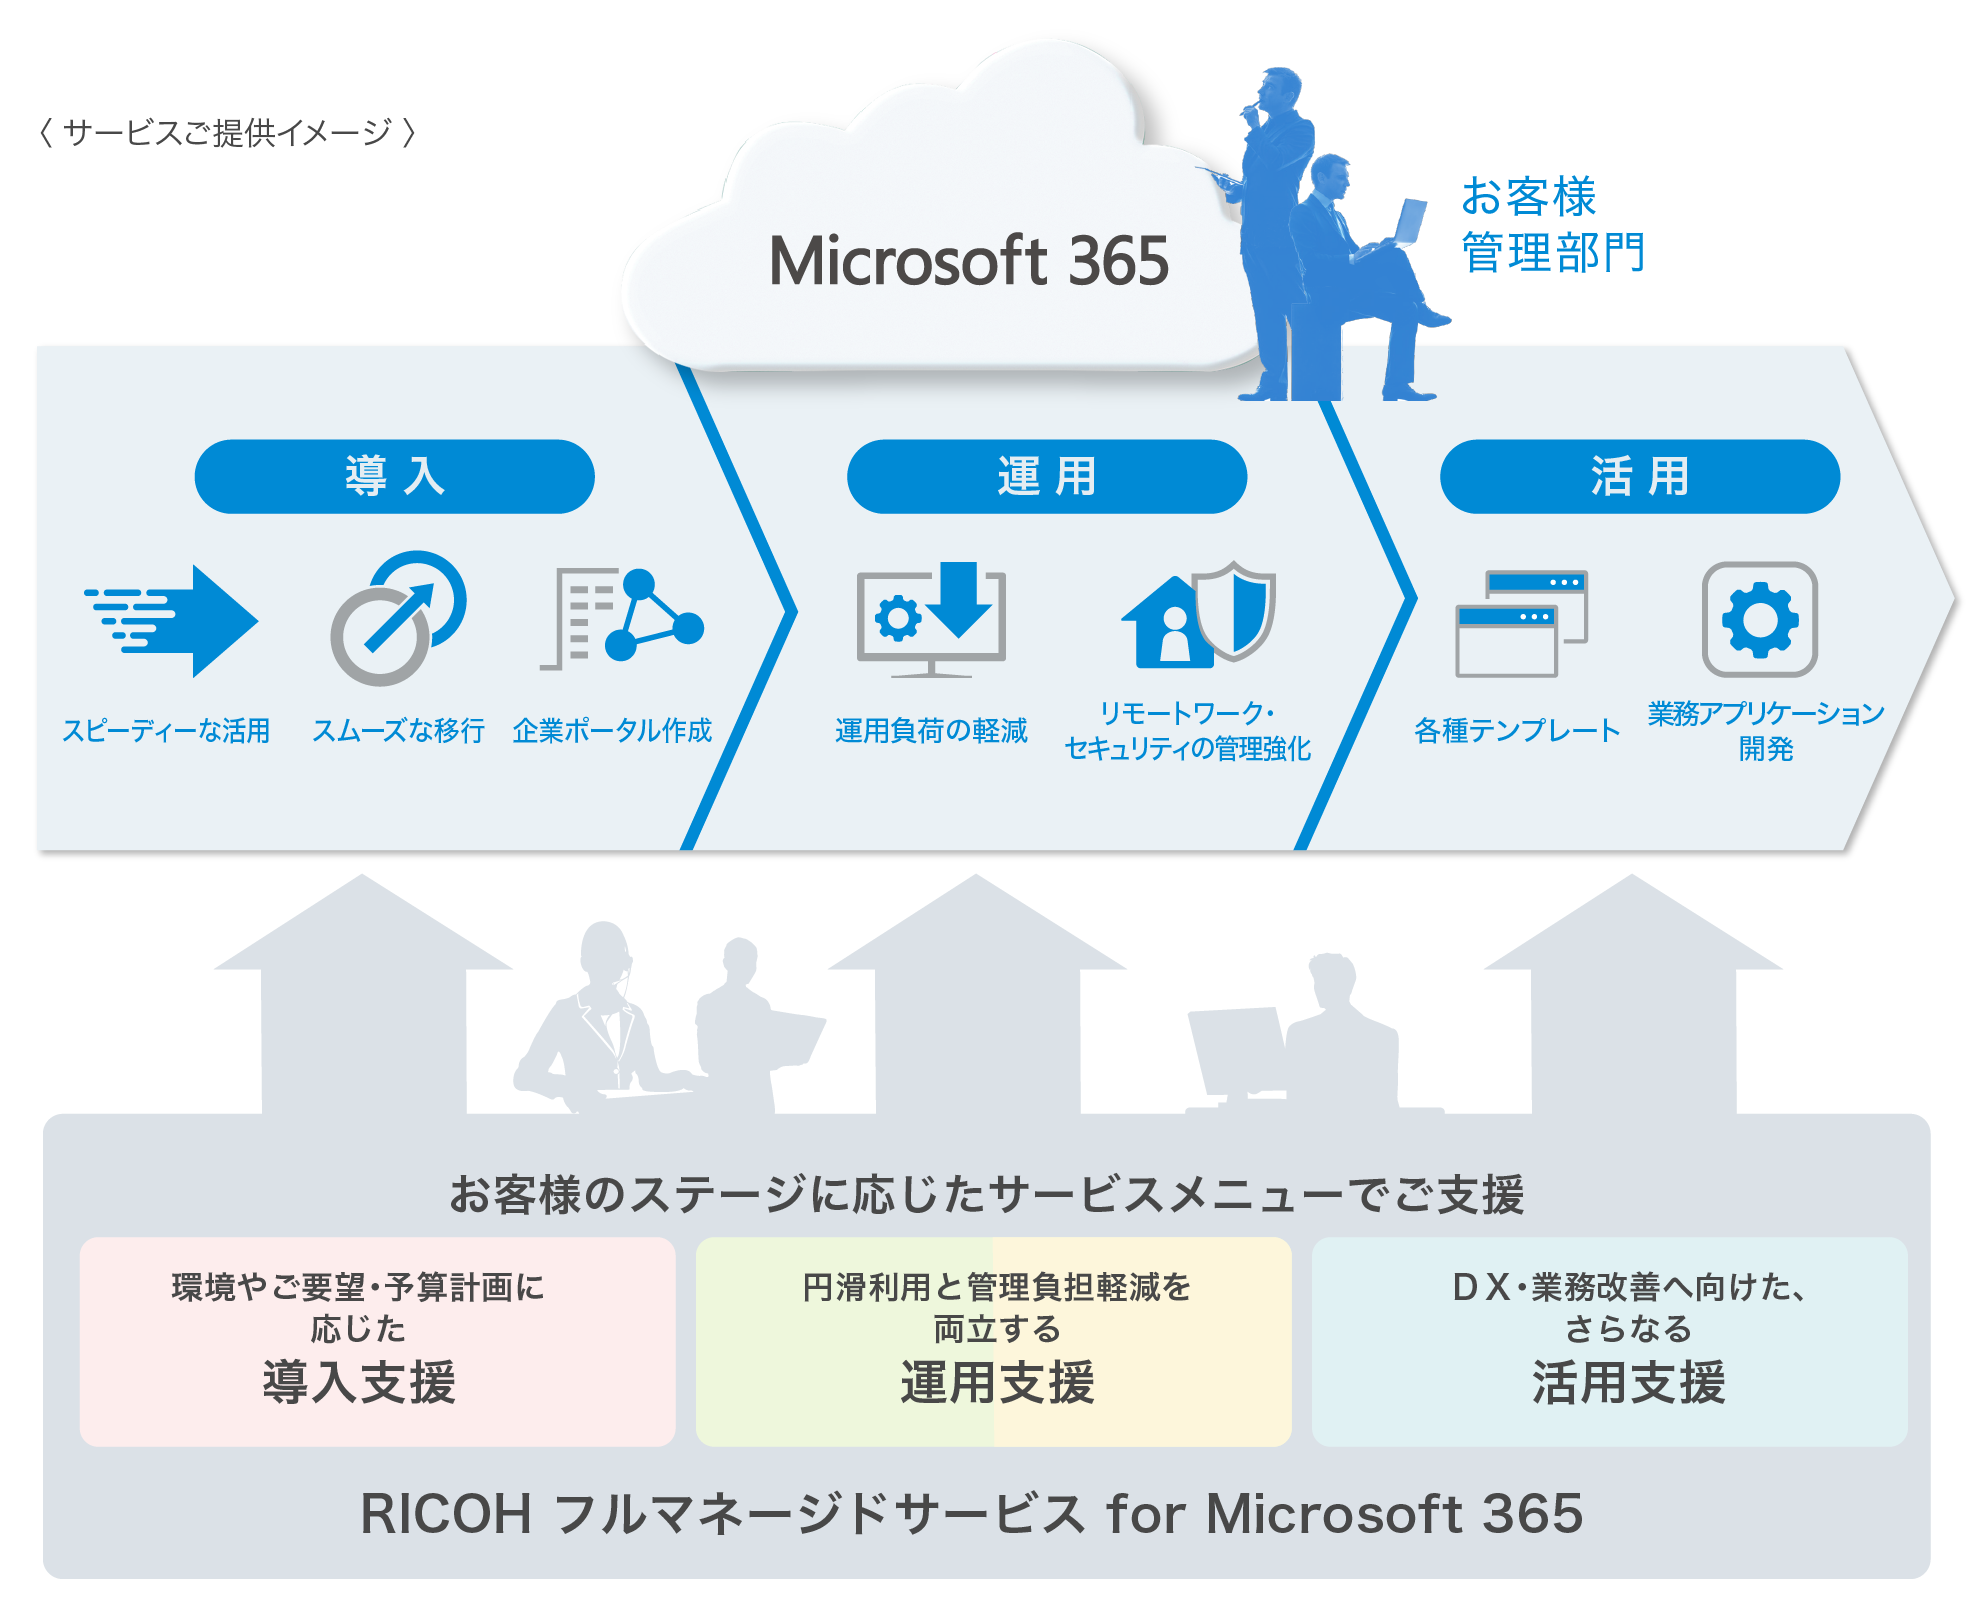 Microsoft 365 サービスご提供イメージ